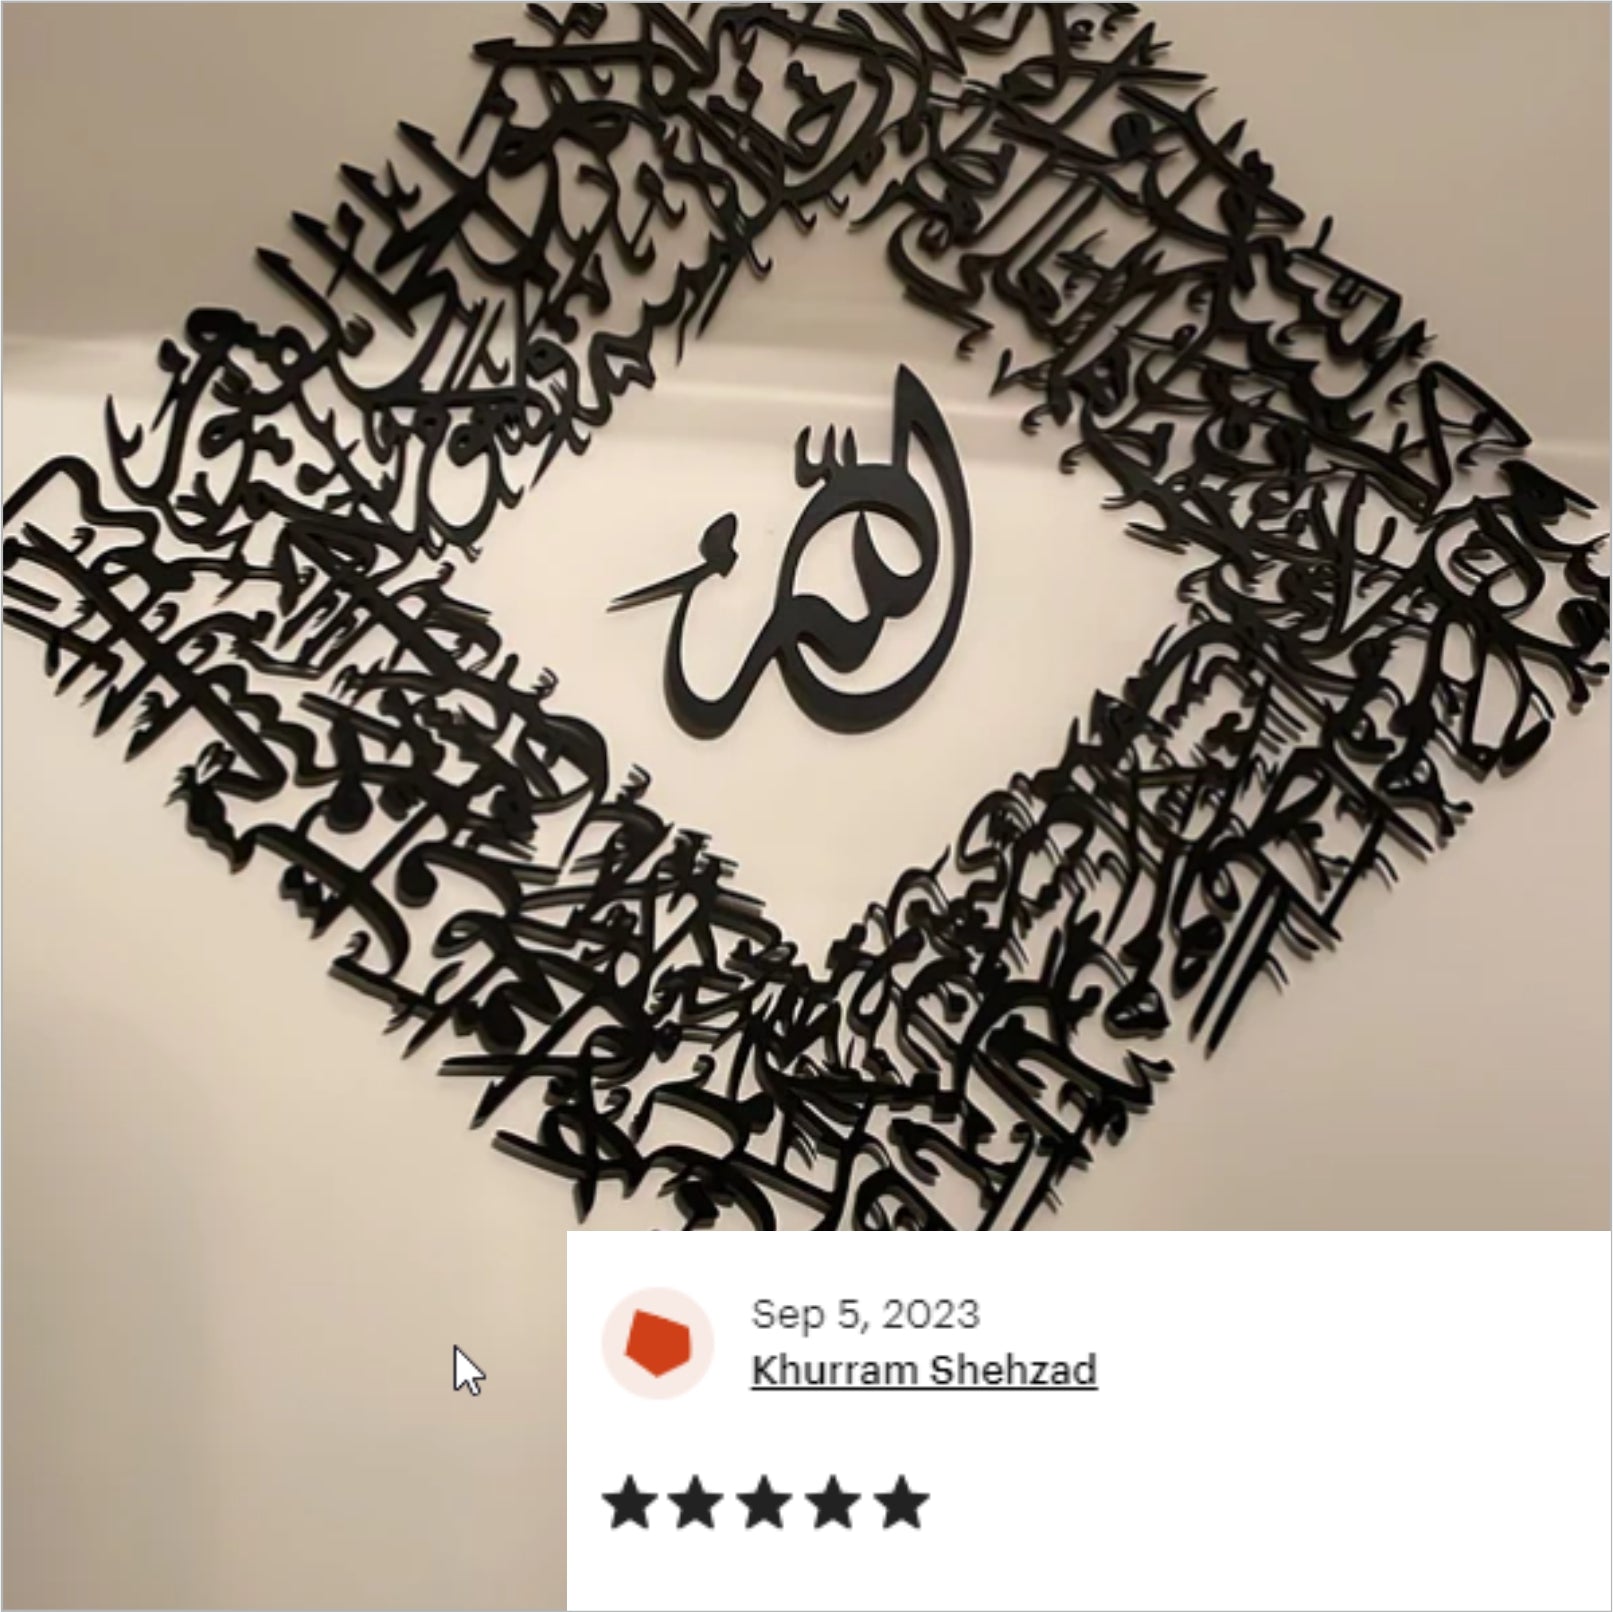 HasbunAllah Calligraphy Islamic Wall Art